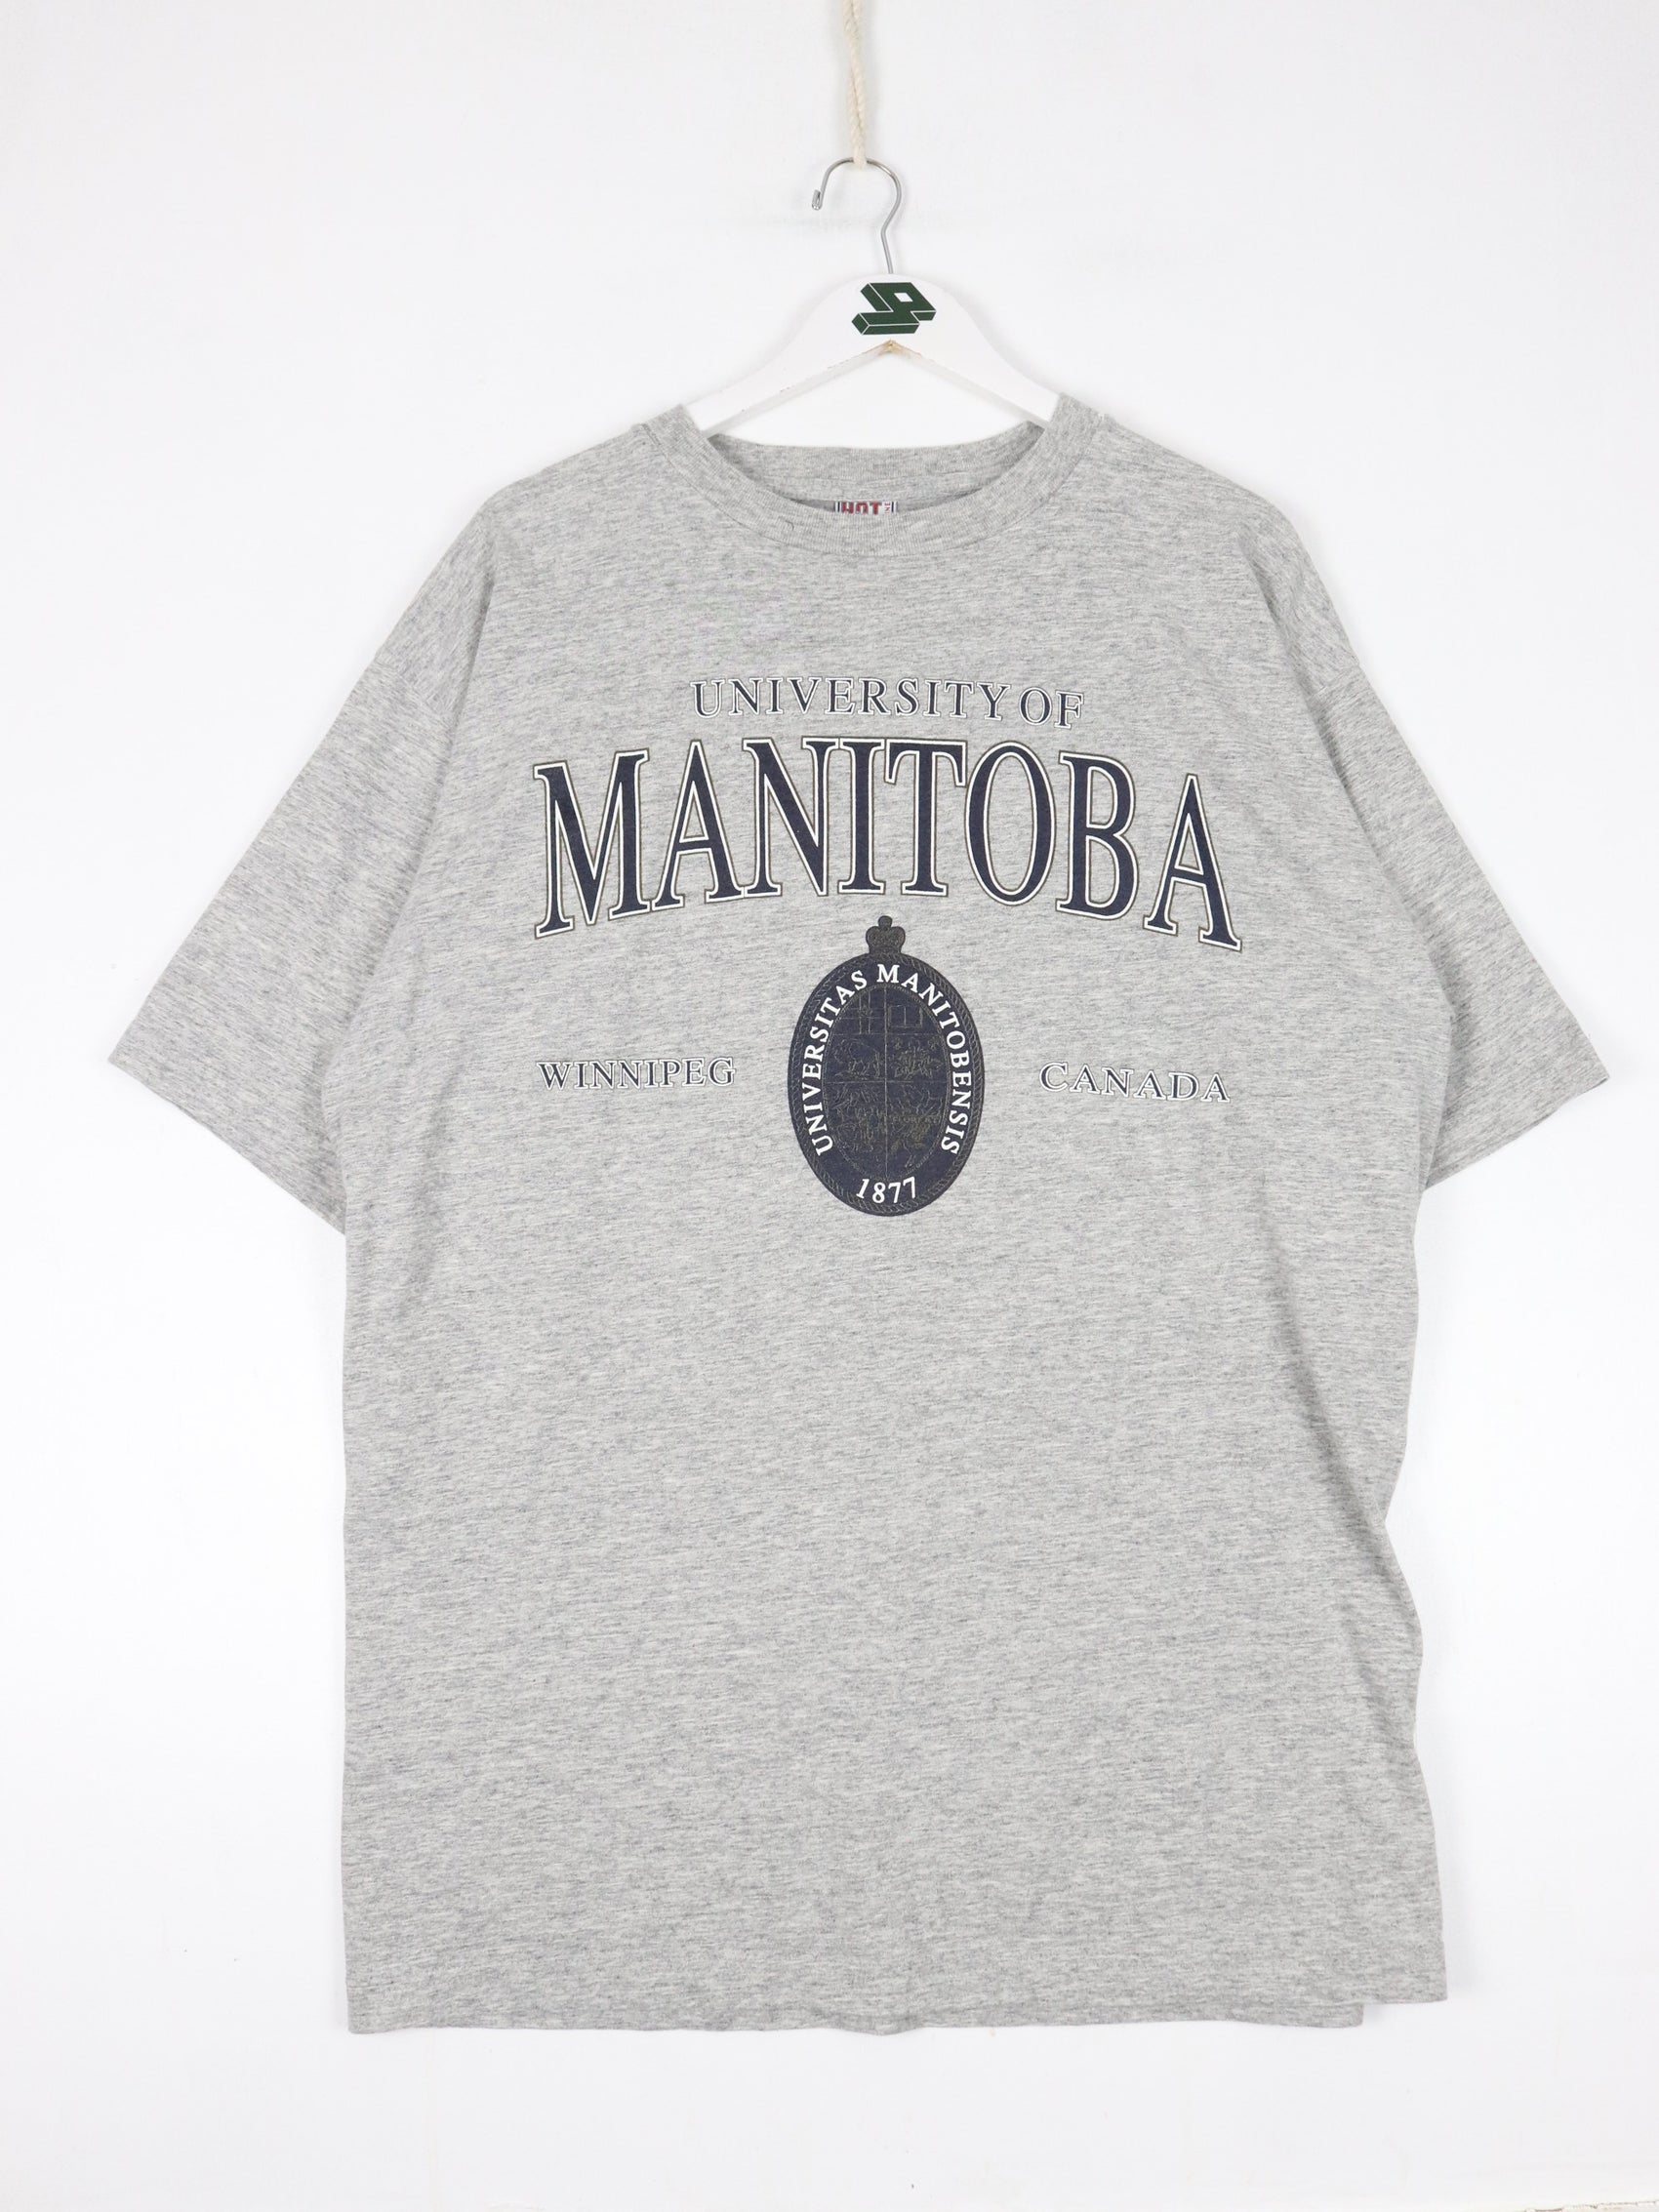 Vintage University of Manitoba T Shirt Mens XL Grey College